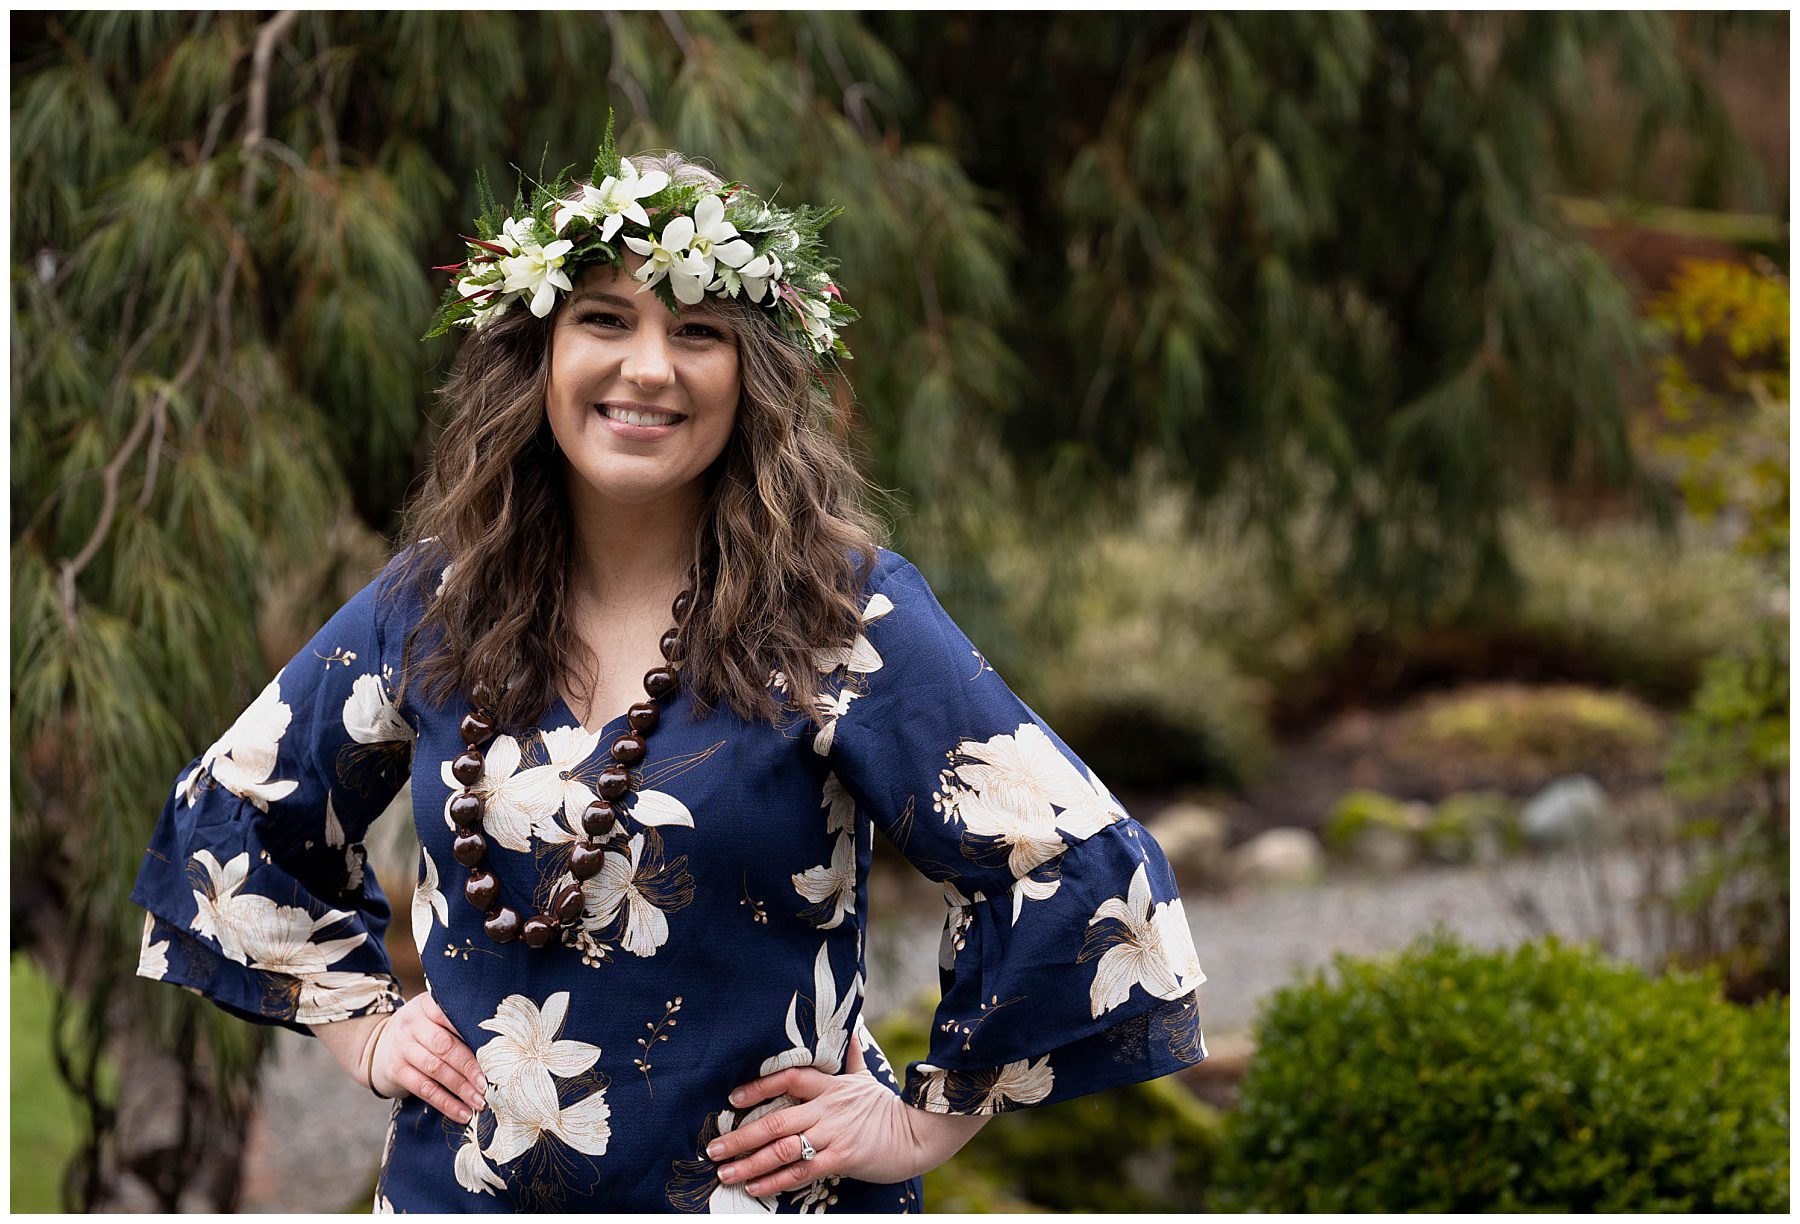 Rebecca Grant shares her expertise on Hawaiian weddings